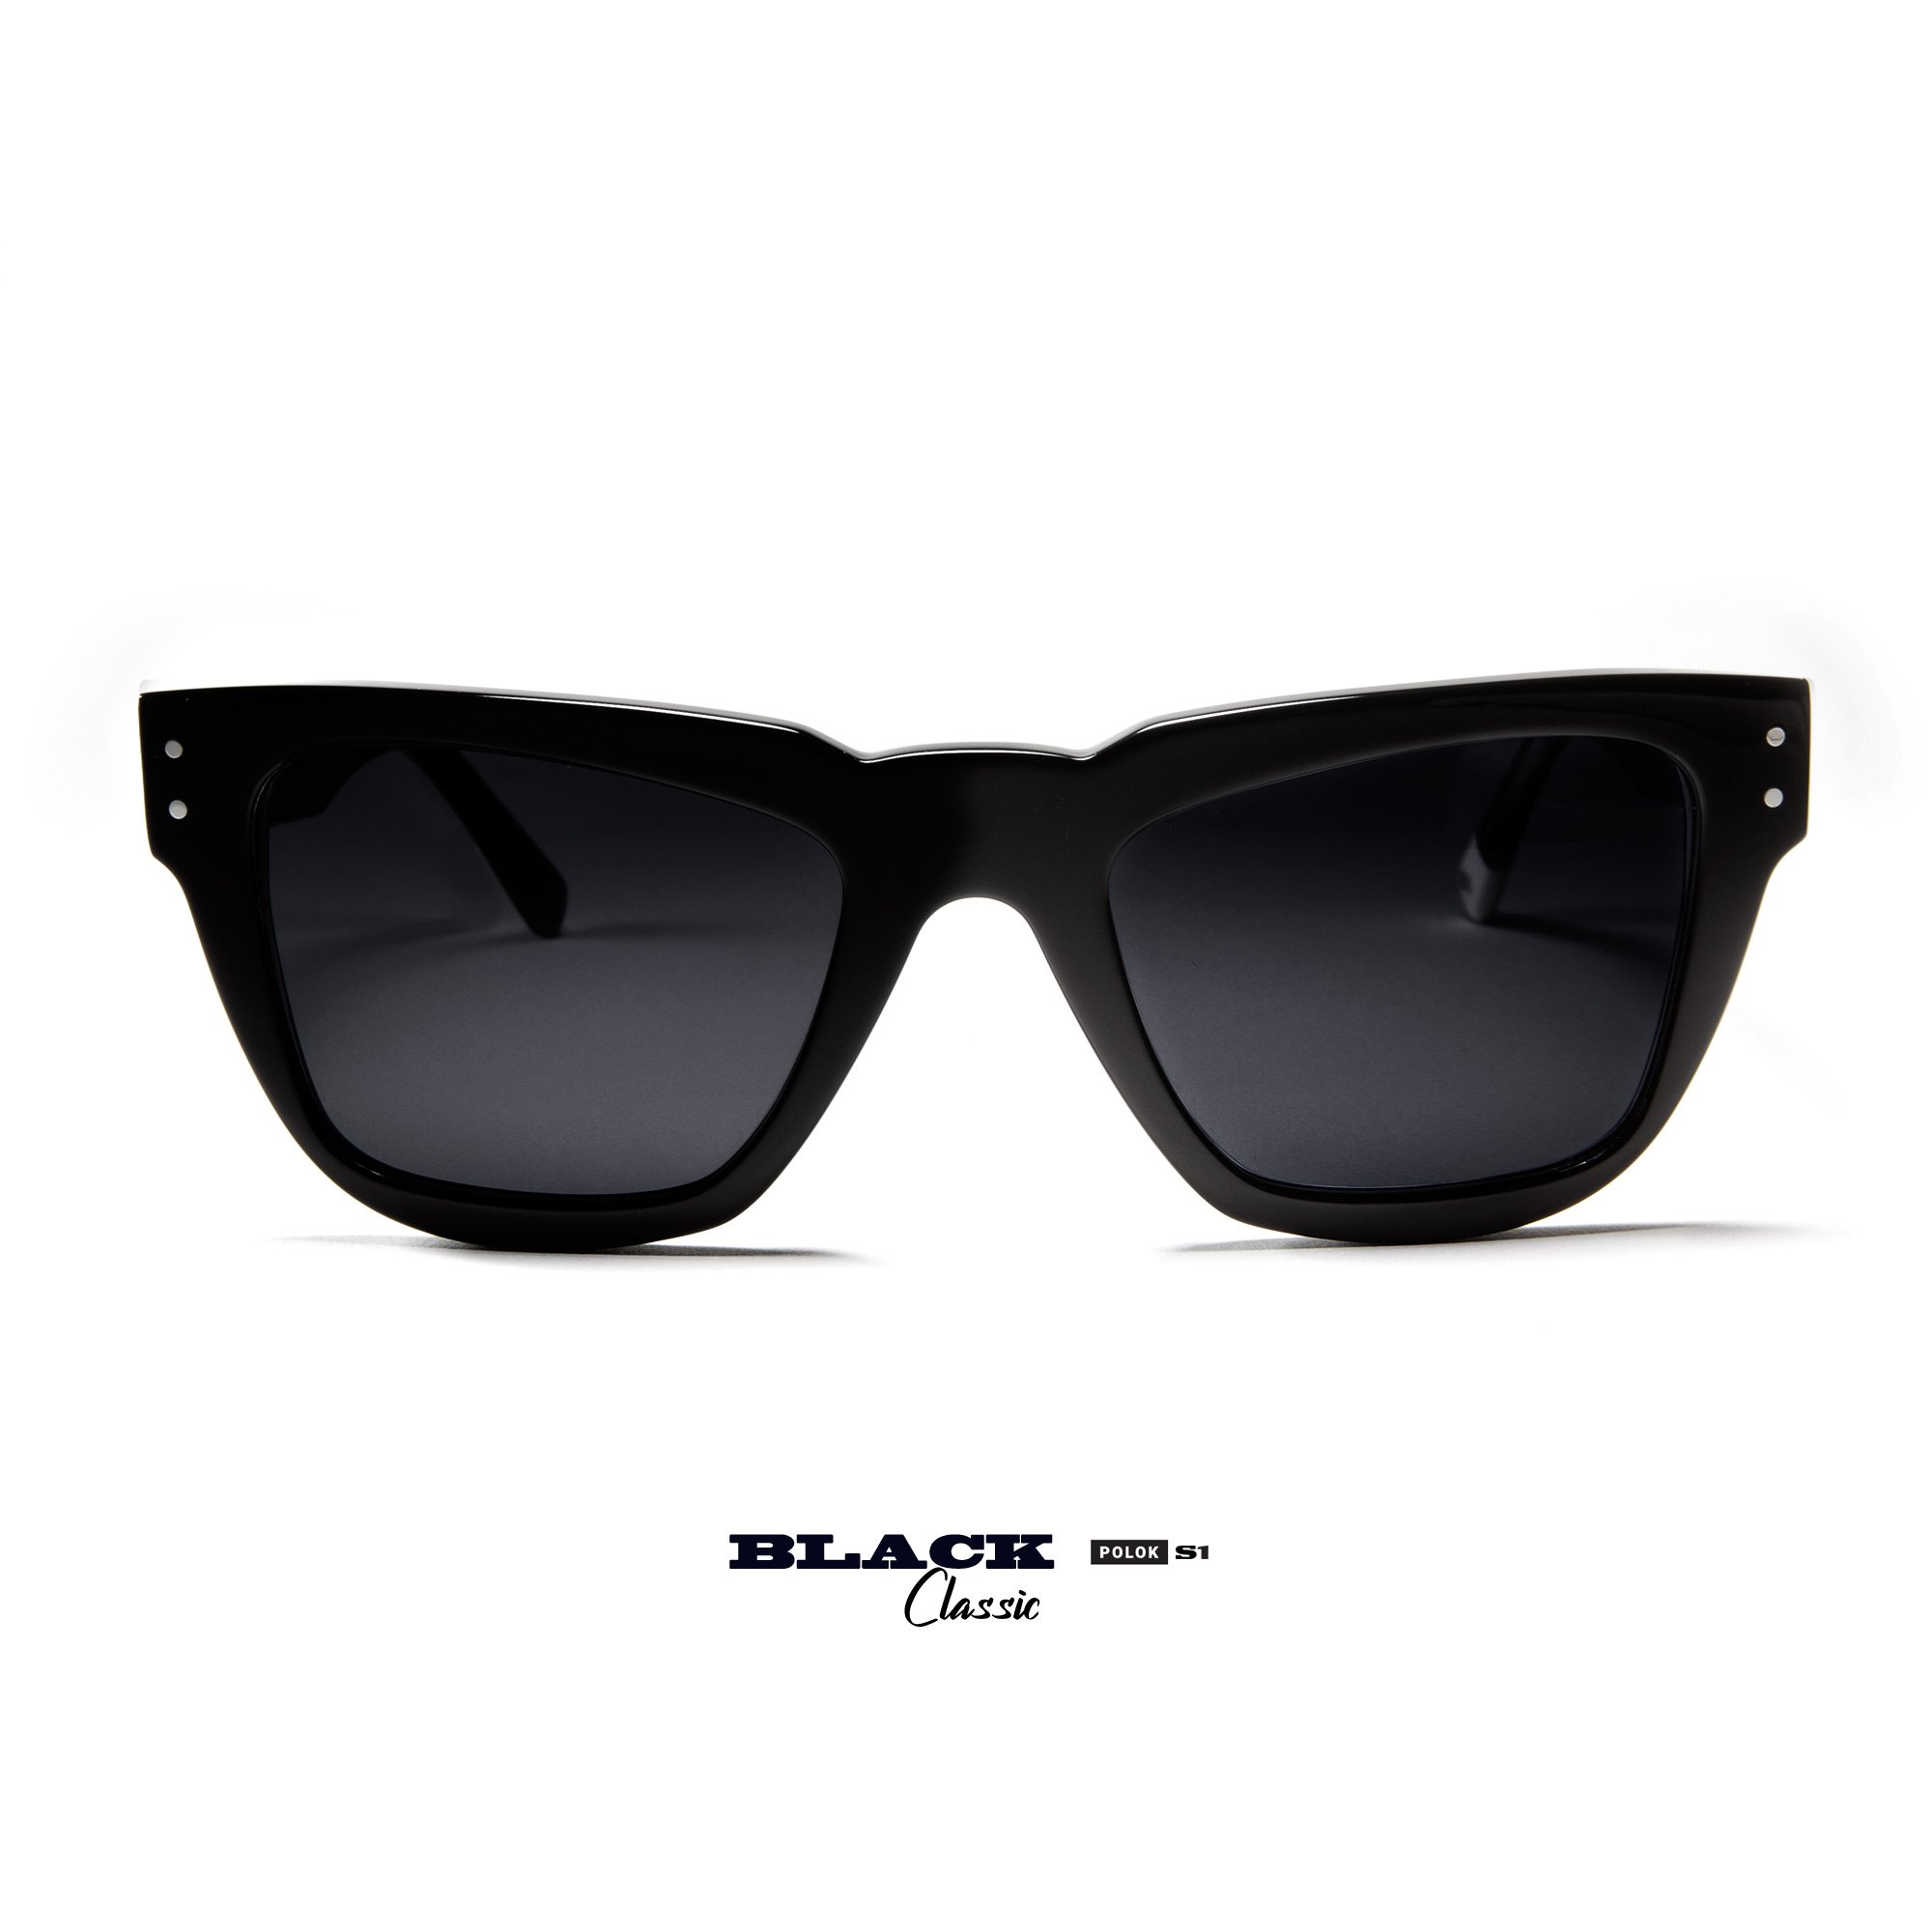 Polok_S1_Sunglasses_Best_online_store_trendy_Rob_adalierd_designer_Vienna_LA_Los-Angeles_Canada_addicted_to_the_Sun_2.jpg